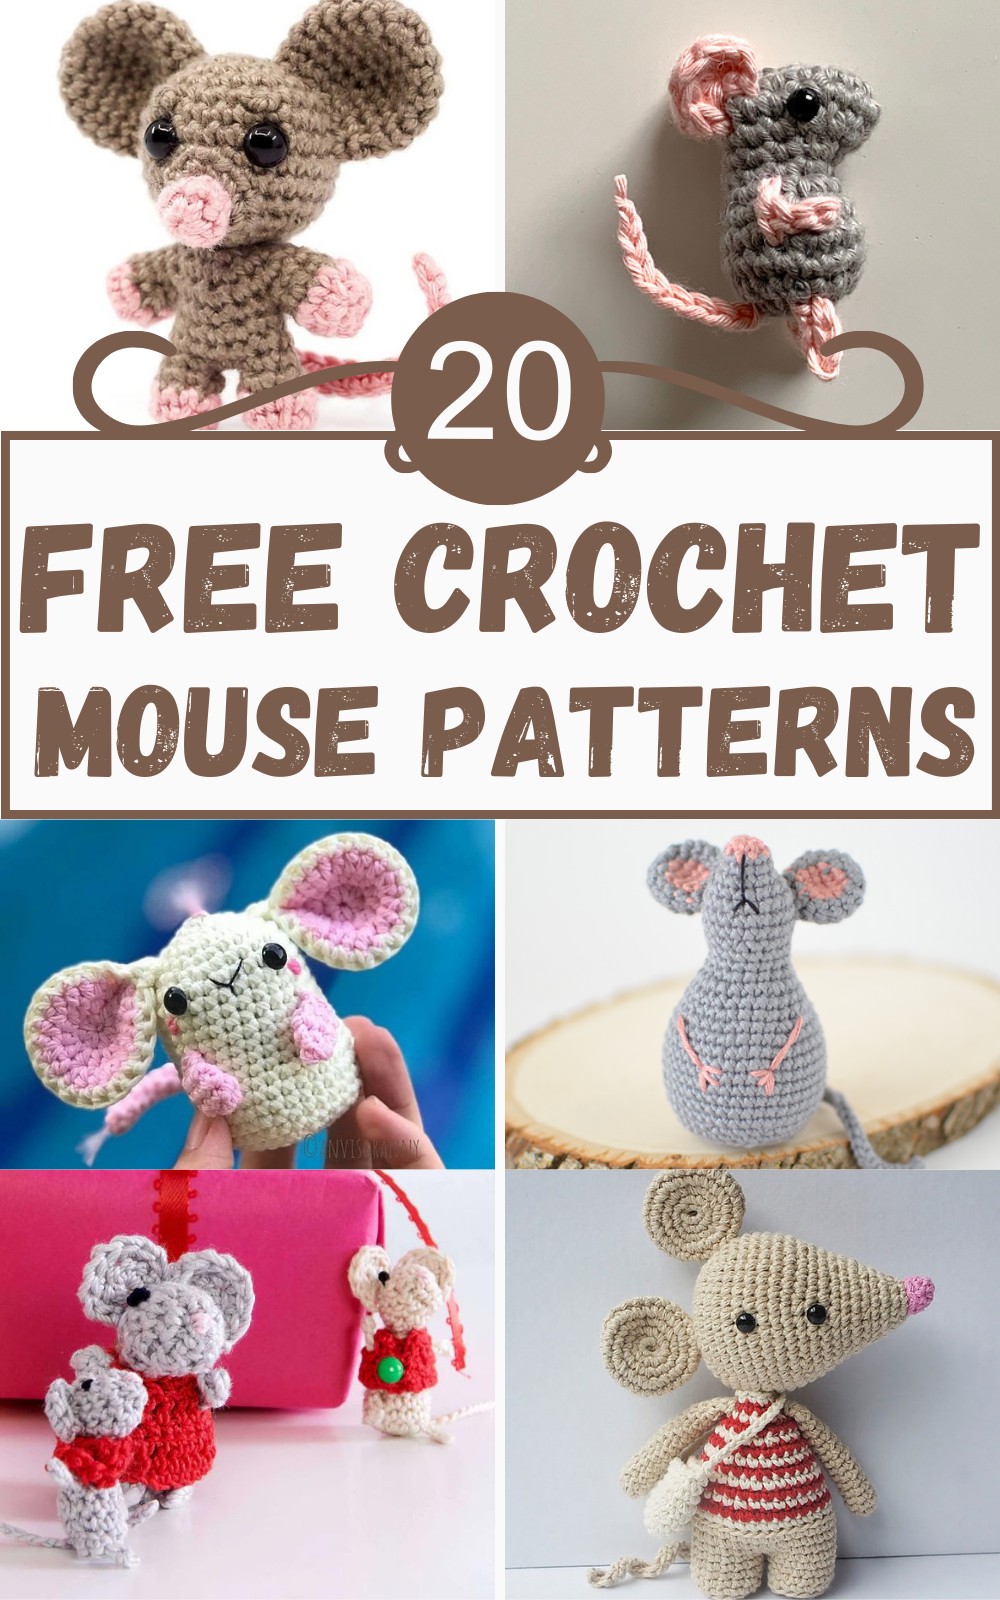 5 Free Crochet Mouse Patterns